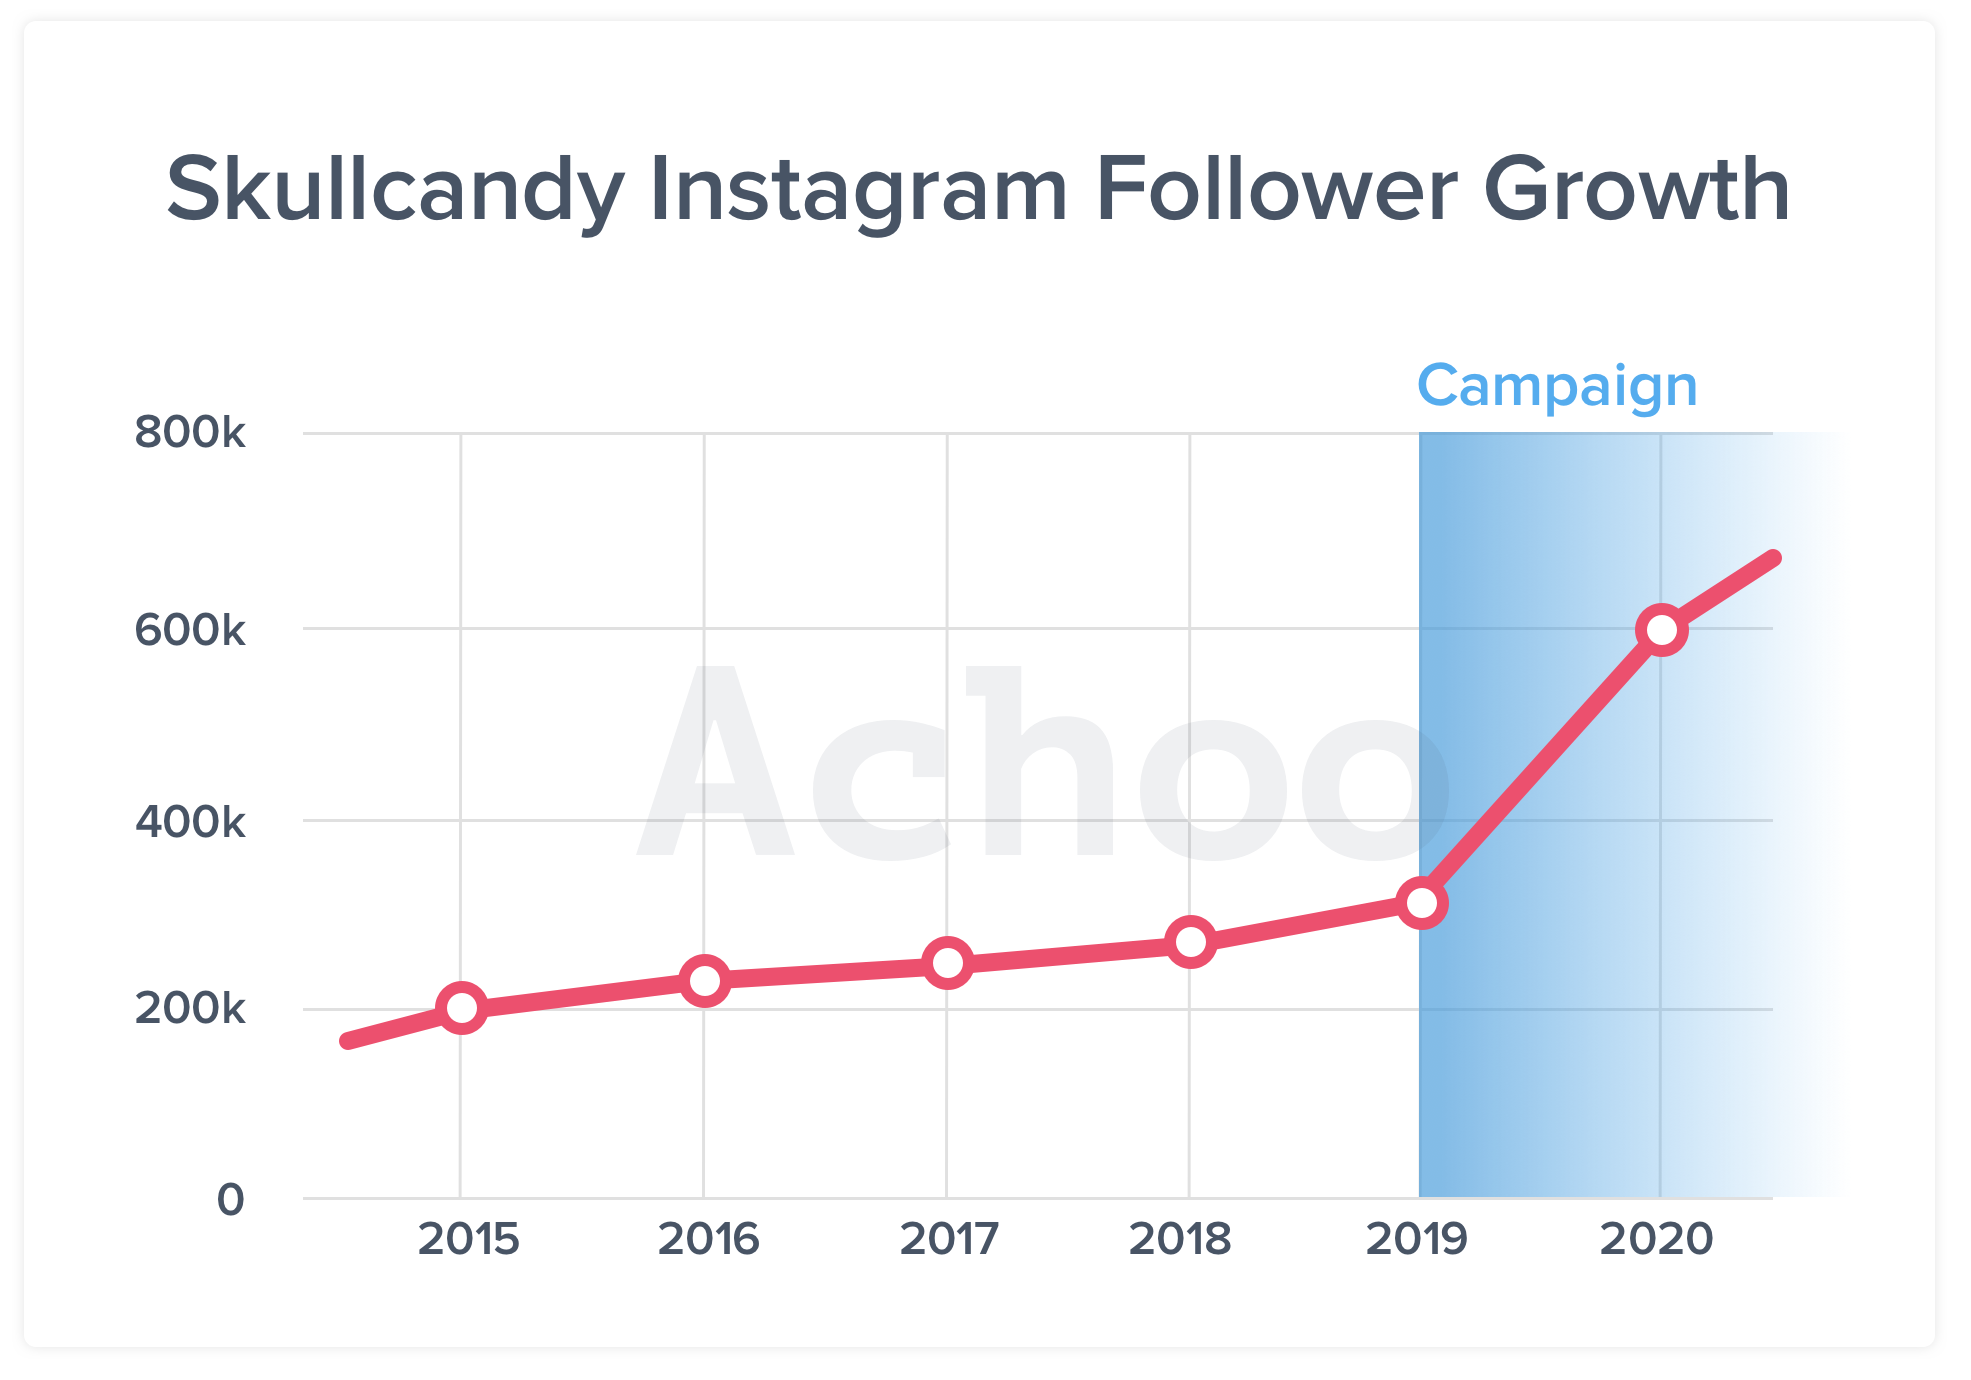 Graph of Skullcandy instagram follower growth